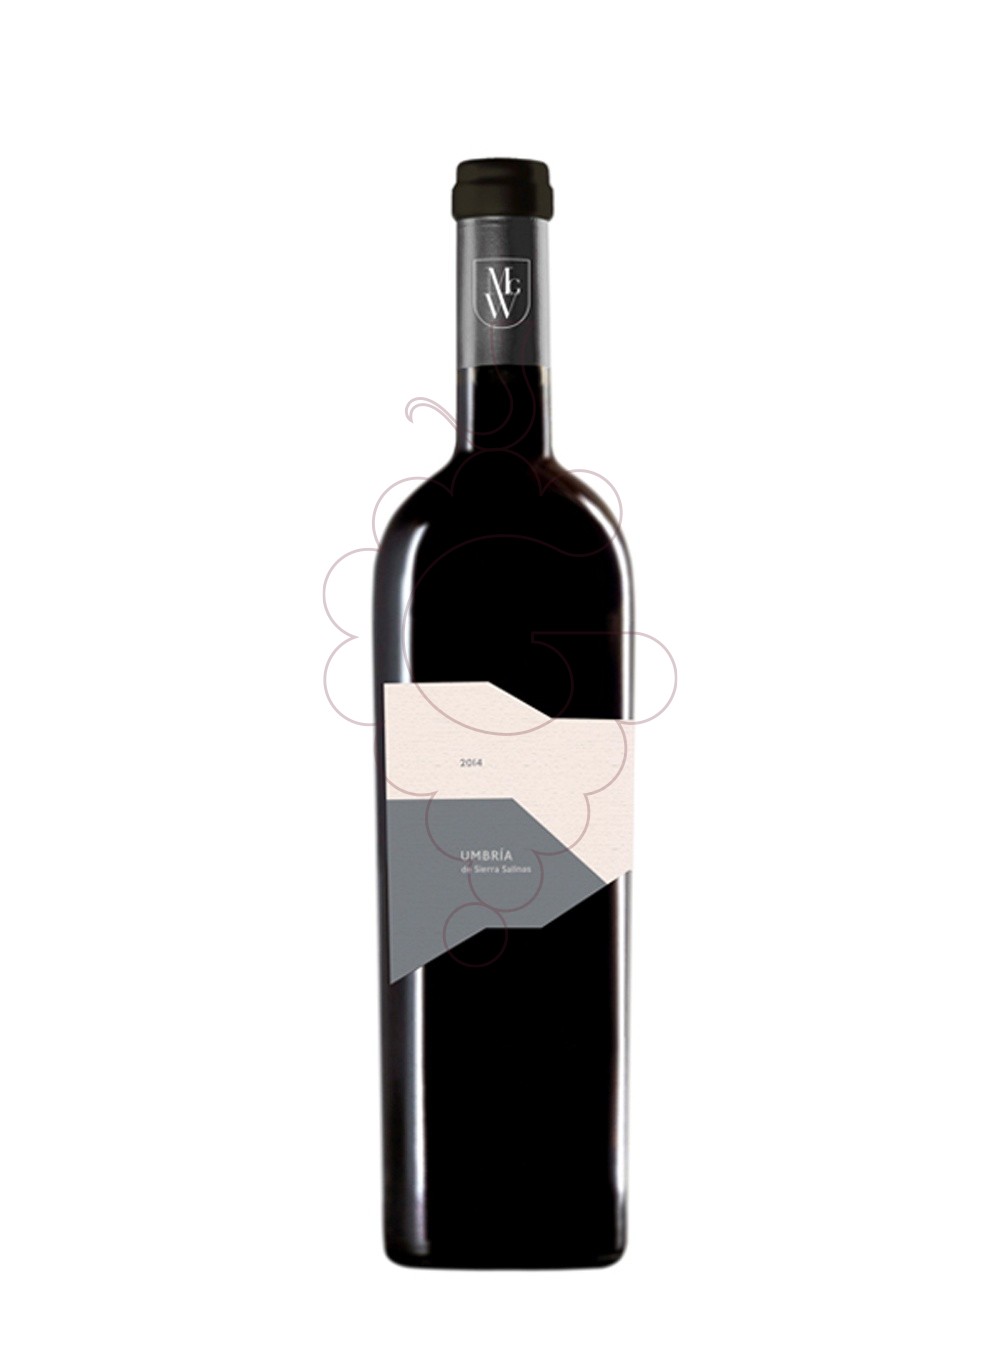 Photo Umbria de sierra salinas 2014 red wine